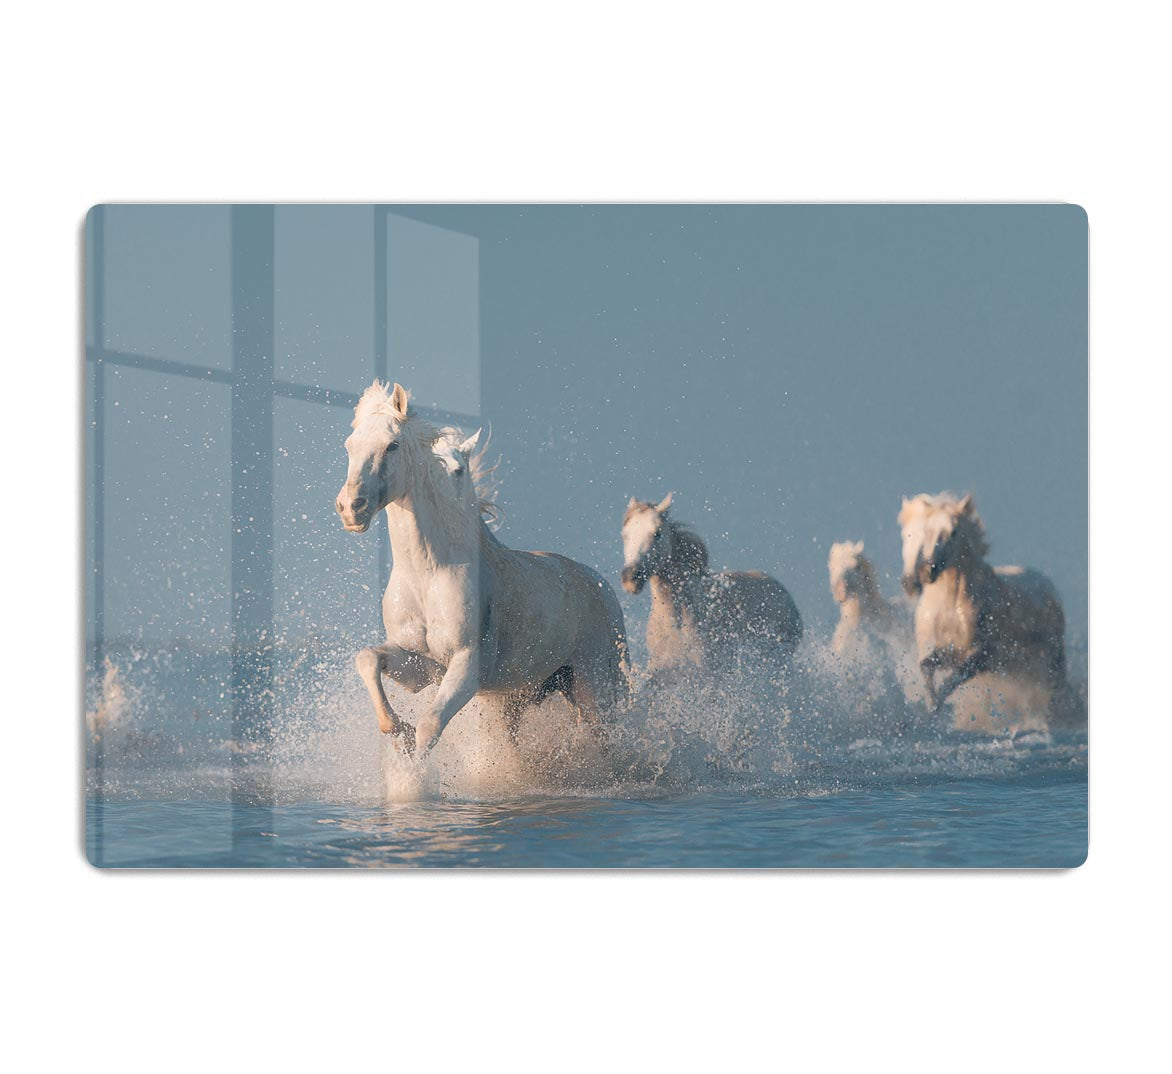 Wite Horses Running In Water HD Metal Print - Canvas Art Rocks - 1